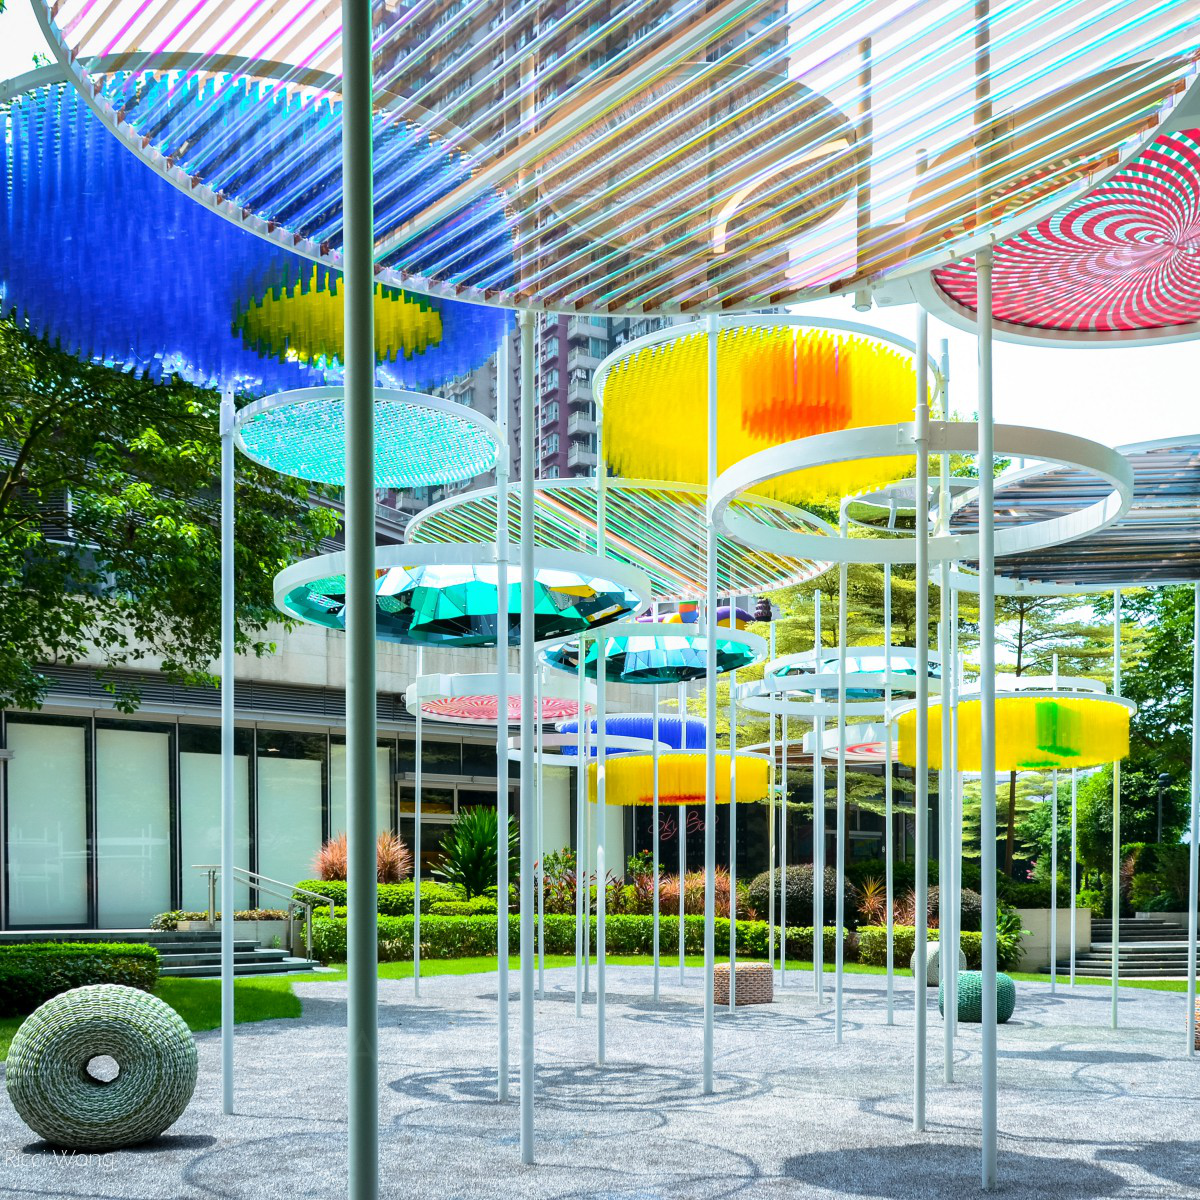 Playoho Art Pavilion by Ricci Wong